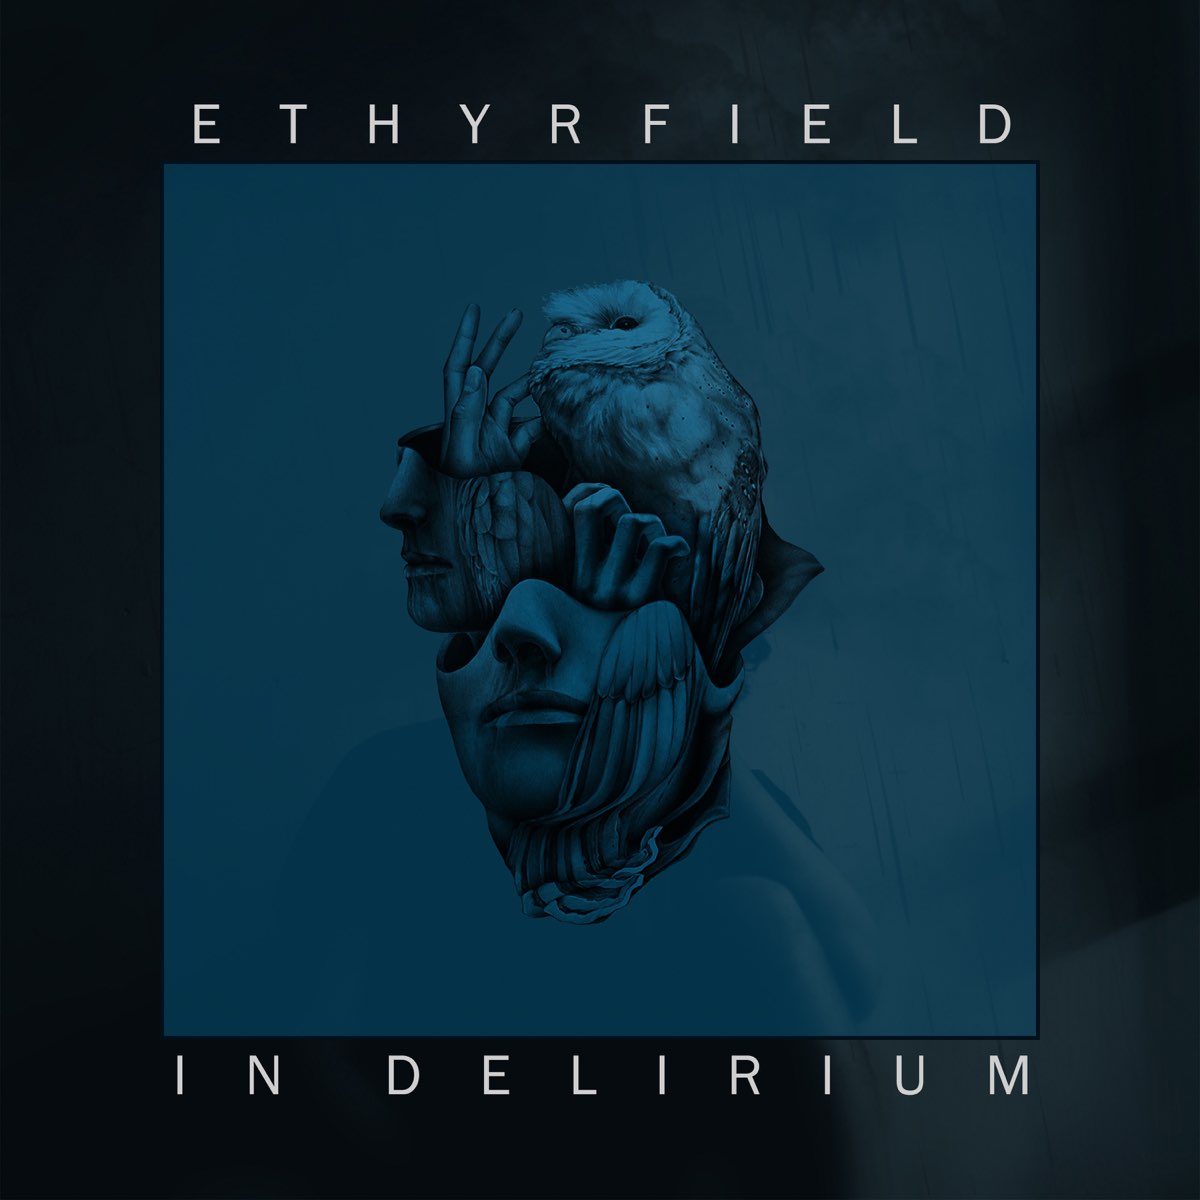 Ethyrfield - "In Delerium" - 2021